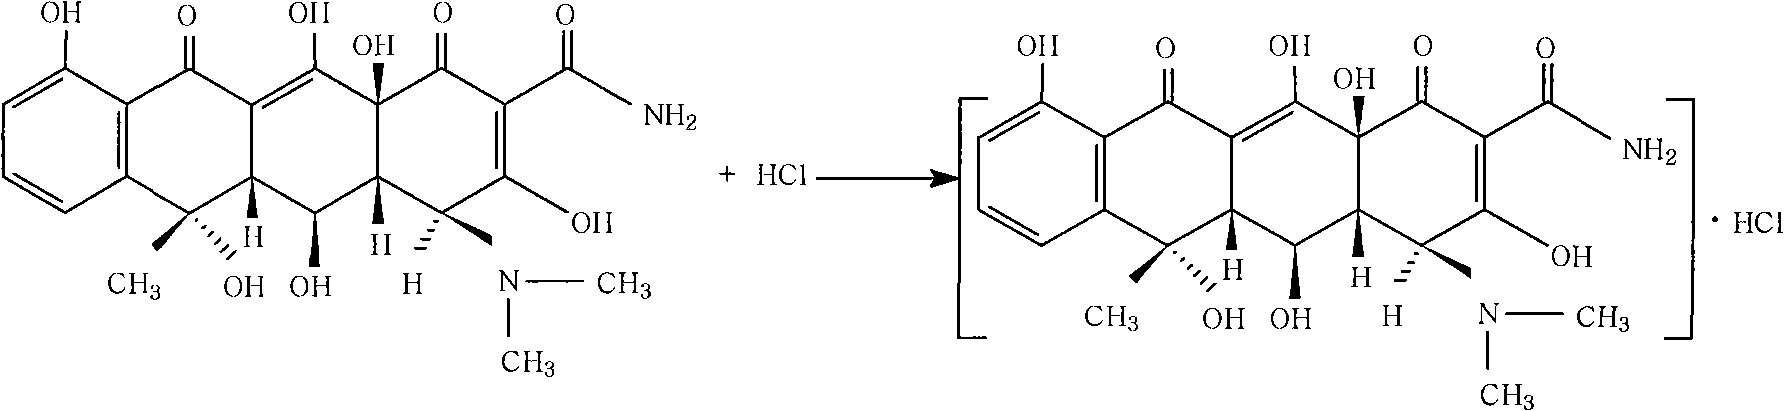 Production process of oxytetracycline dihydrate hydrochloride